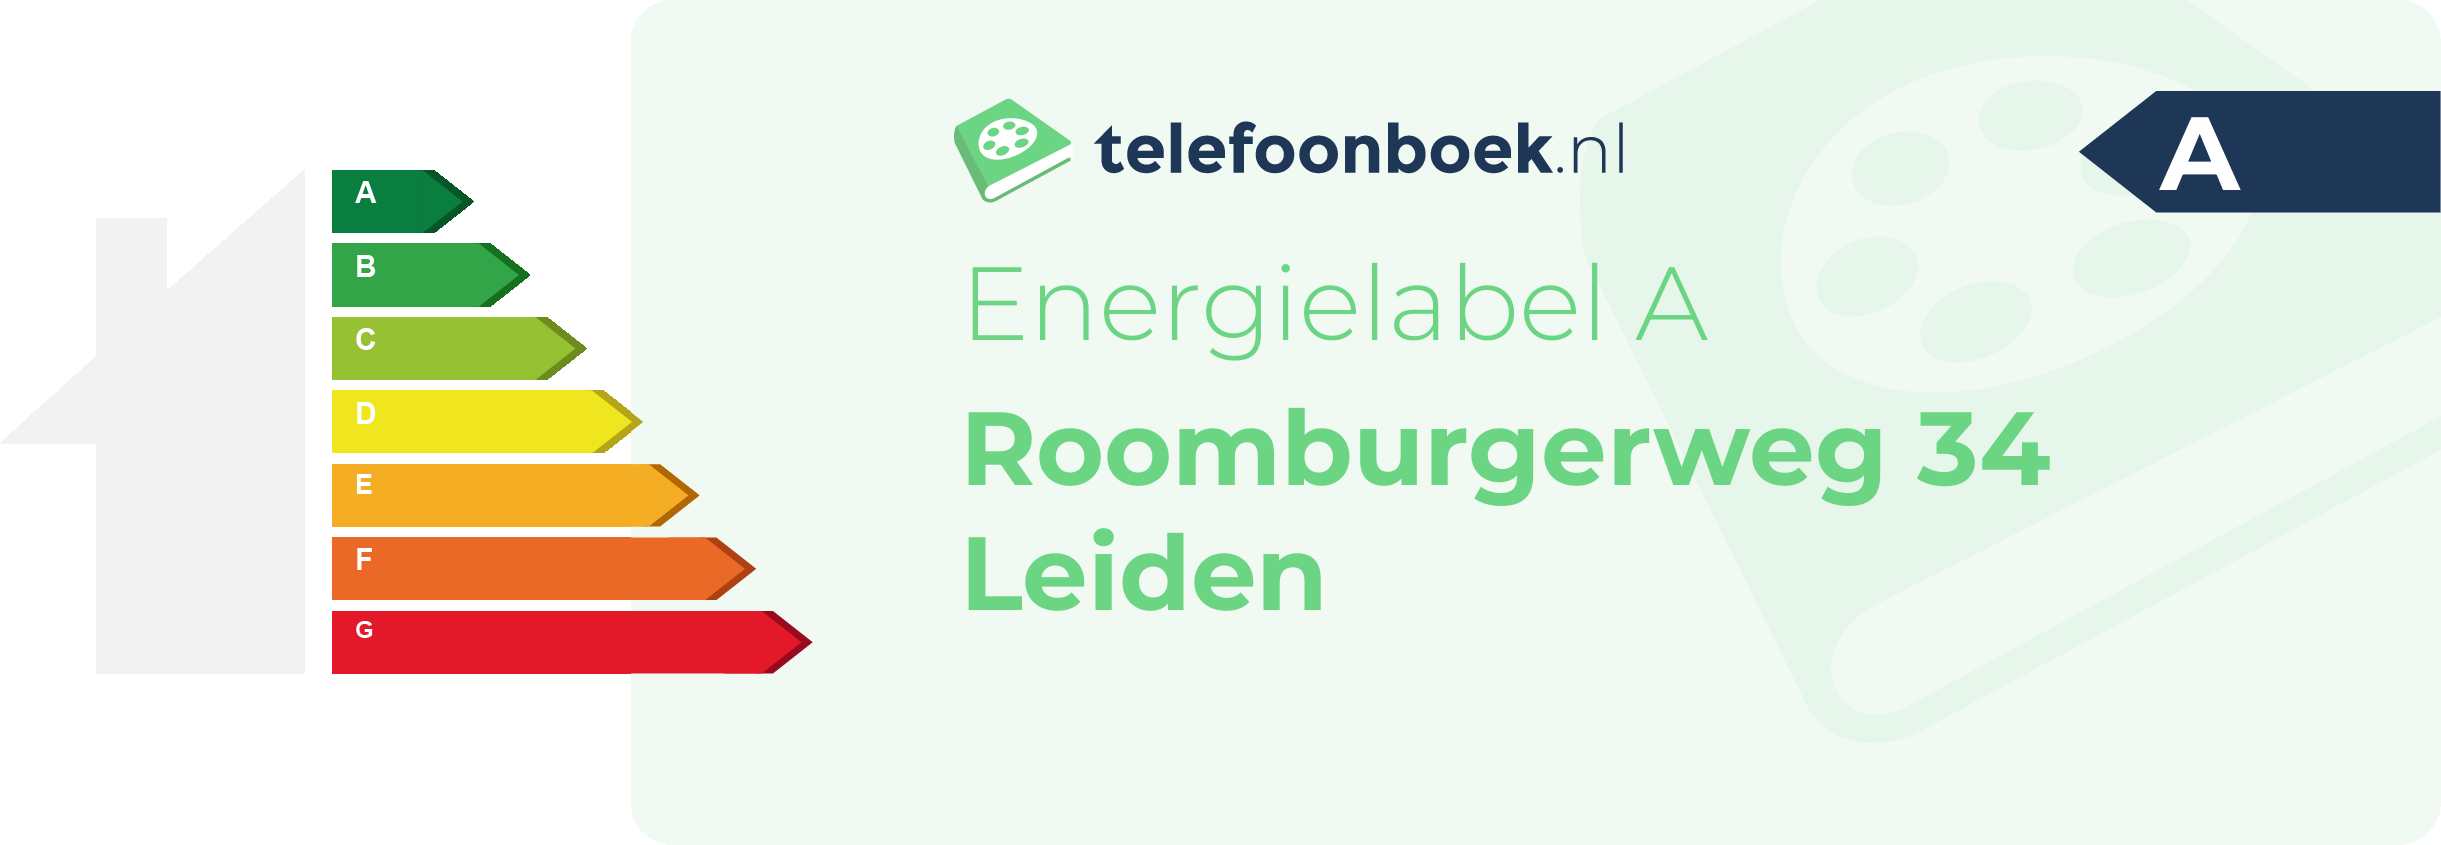 Energielabel Roomburgerweg 34 Leiden